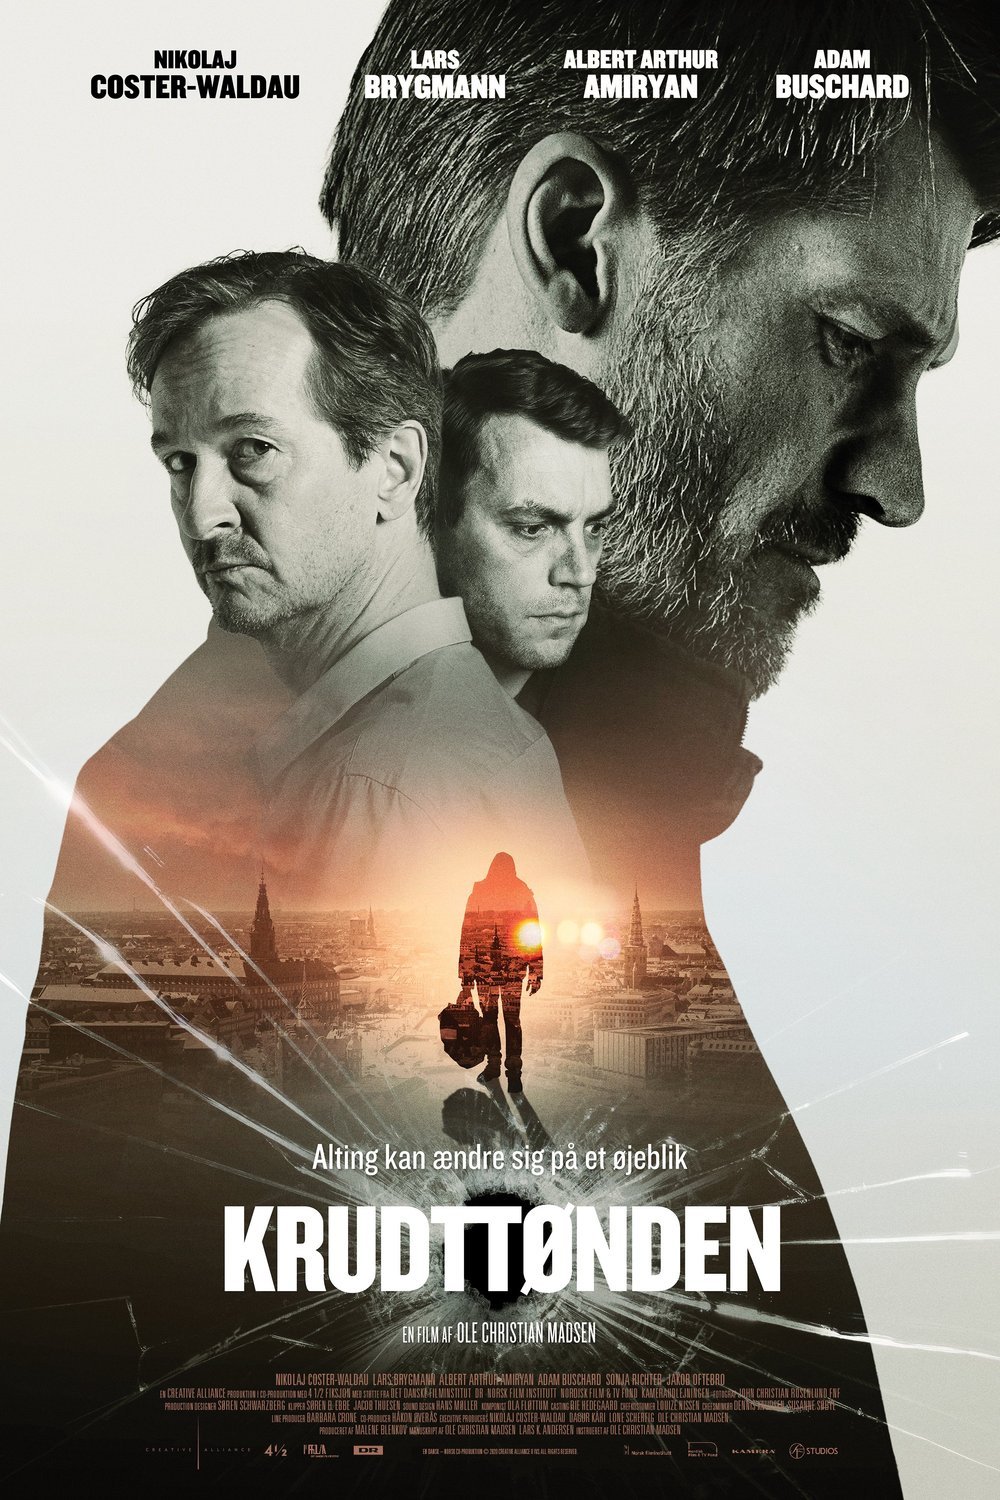 L'affiche originale du film Krudttønden en danois